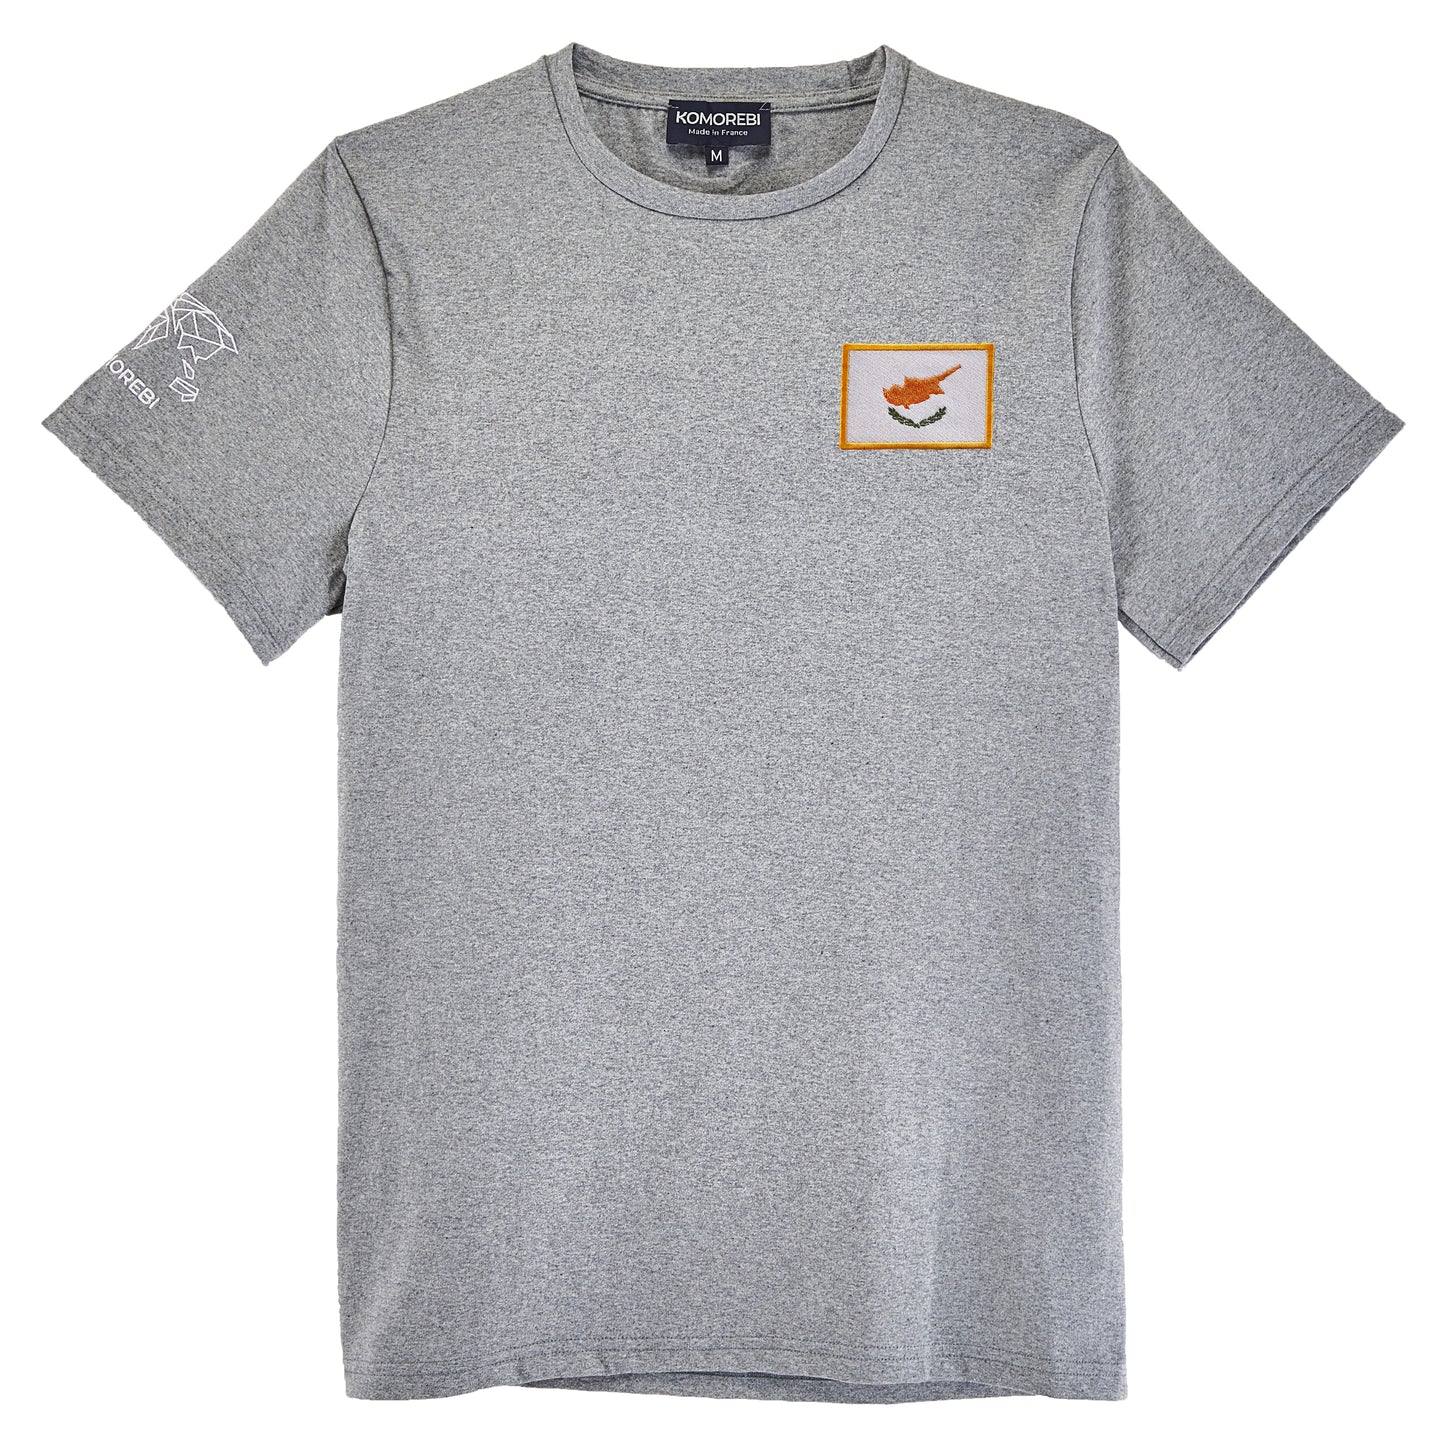 Chypre • T-shirt